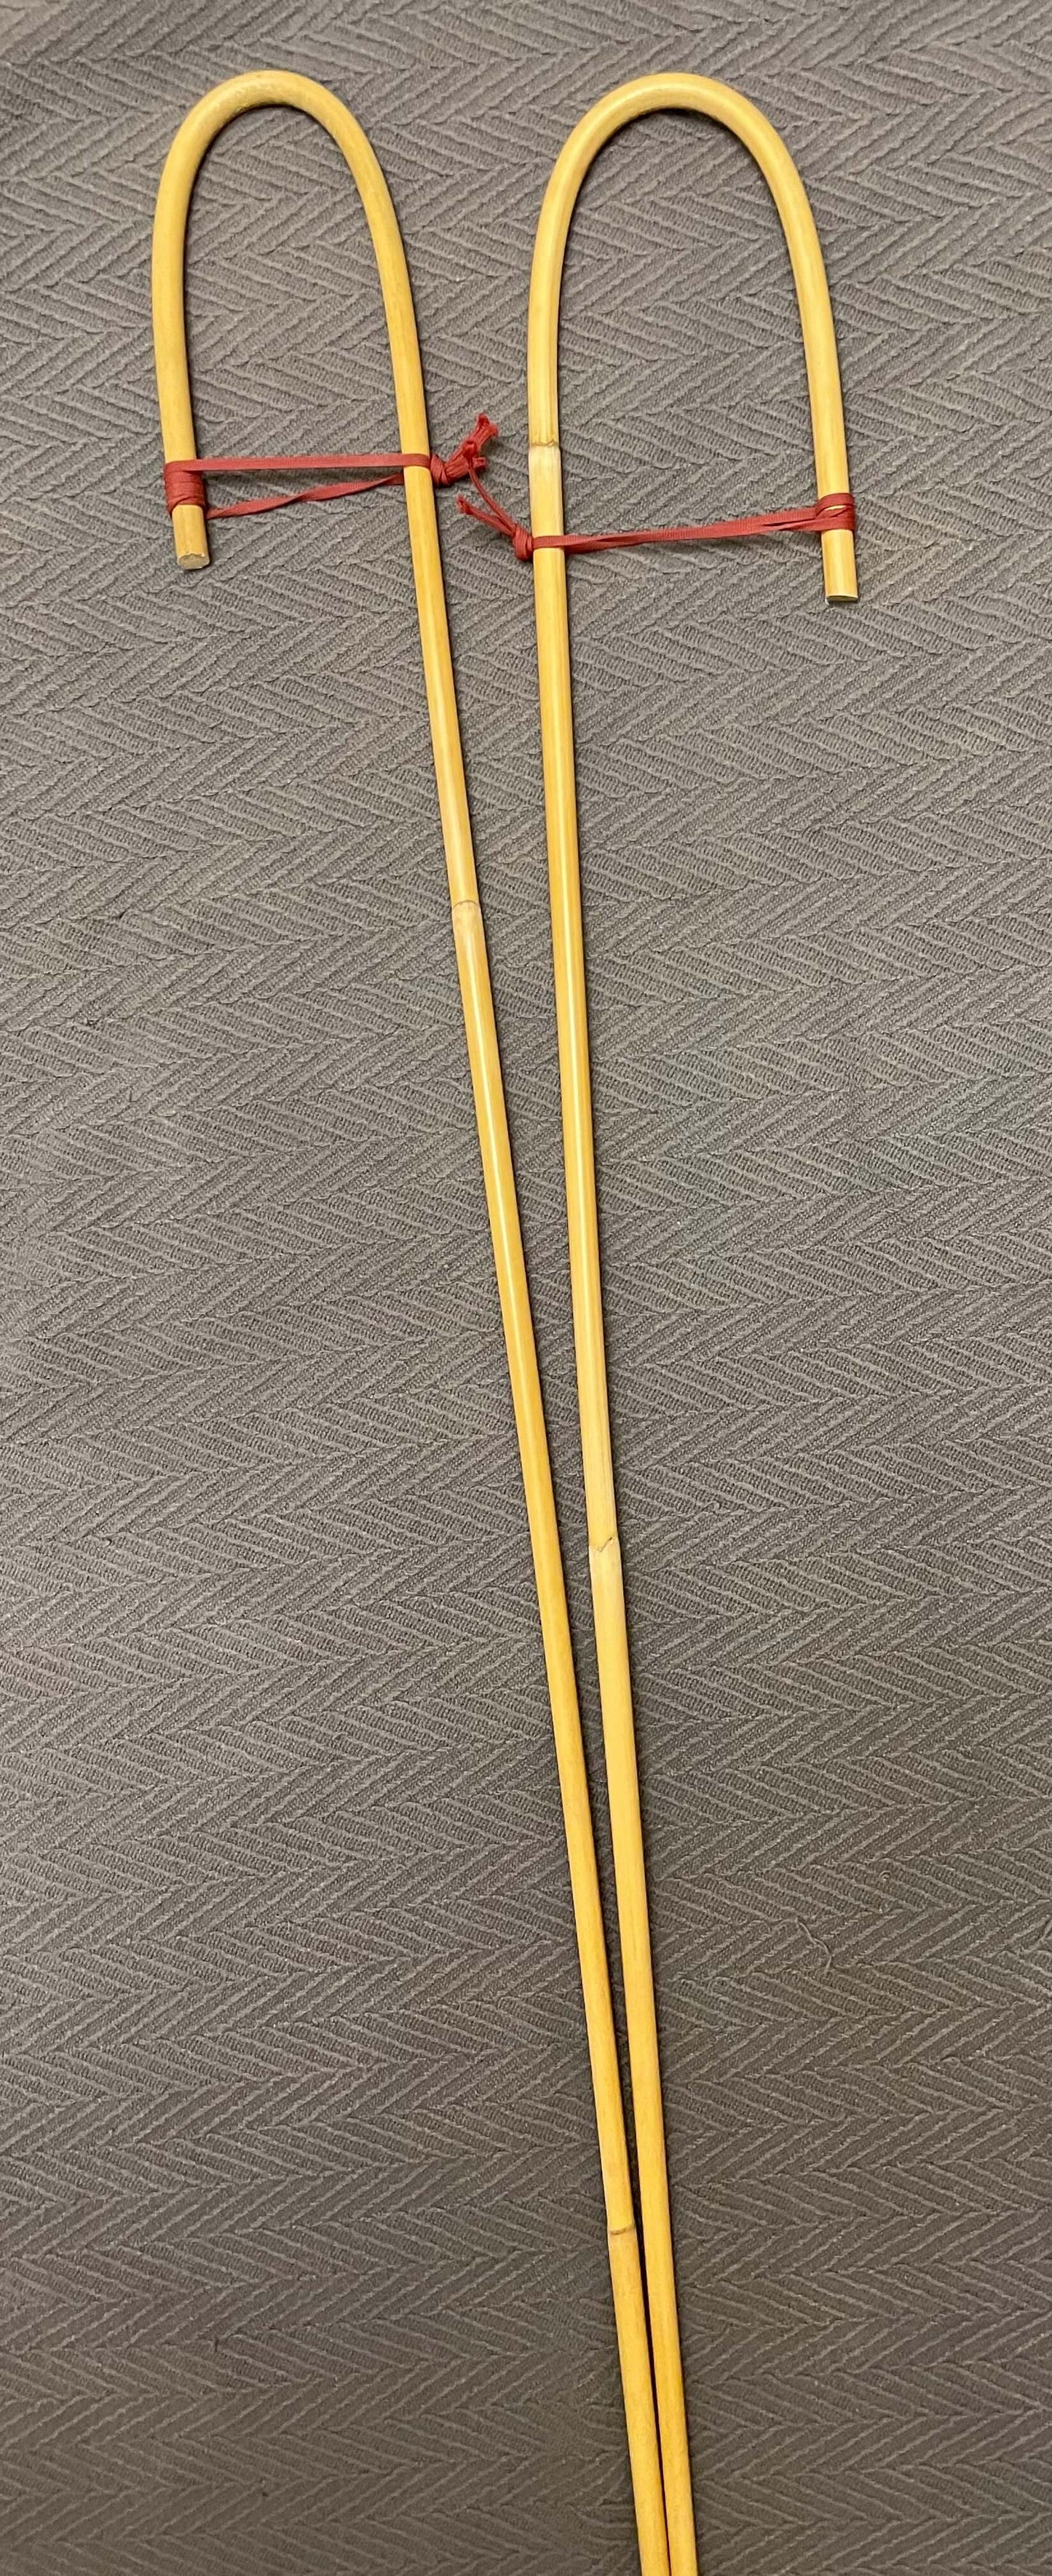 English Traditional Crook Handle School Canes - Classic Dragon Rattan School Cane / Punishment Cane - 90-95 cms L & 7.5-8.5/9-10/10-11mm/11-12mm D